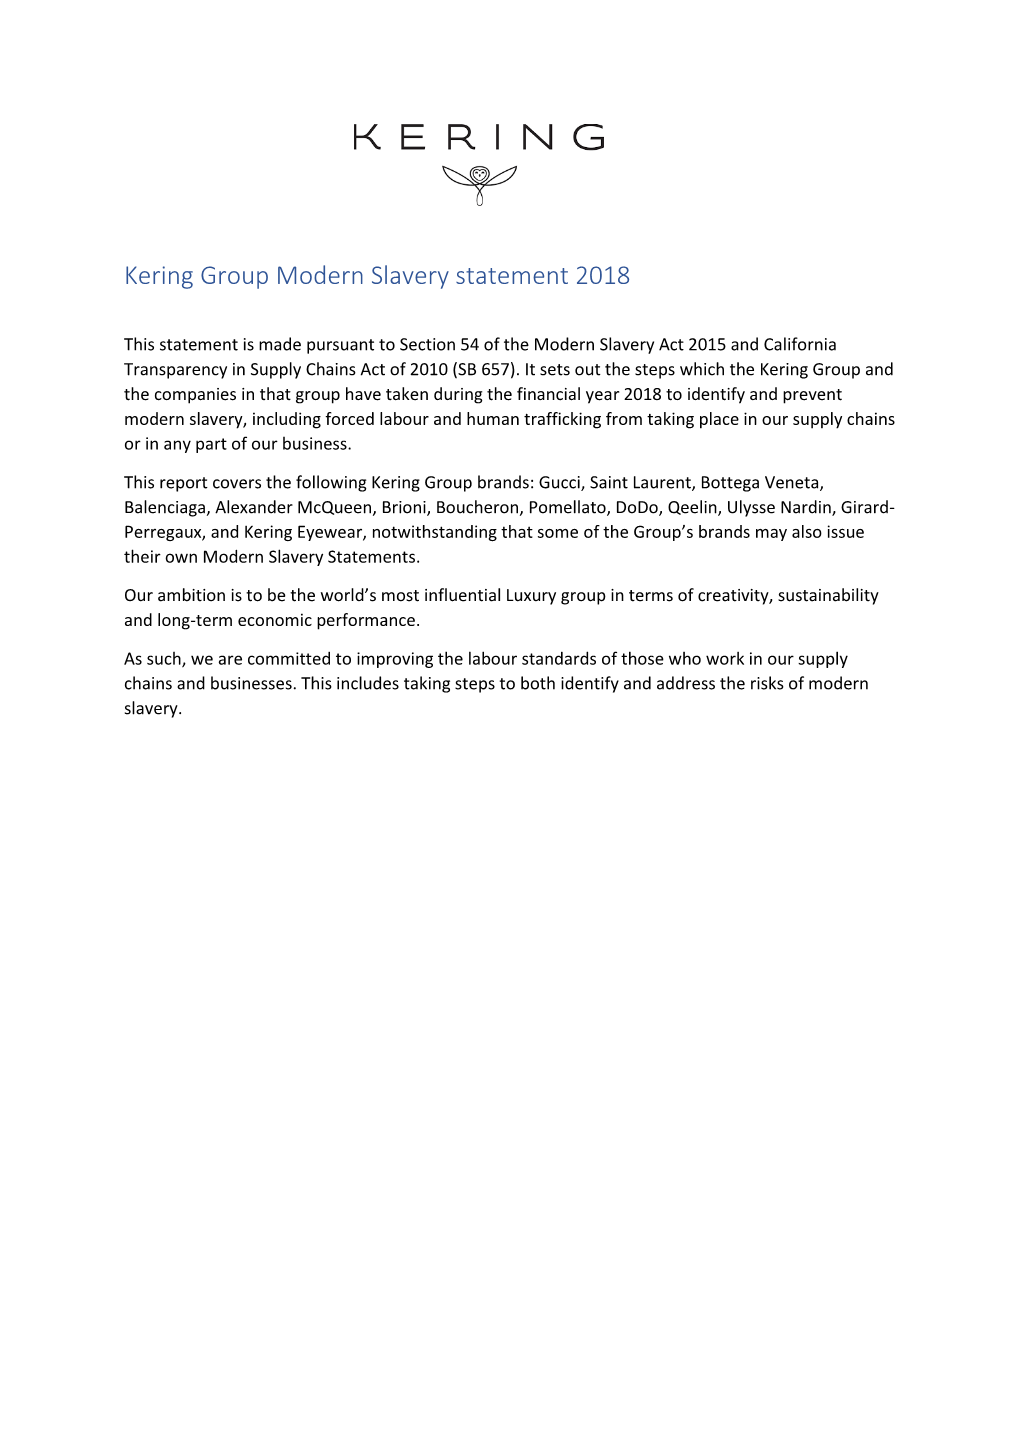 Kering Group Modern Slavery Statement 2018